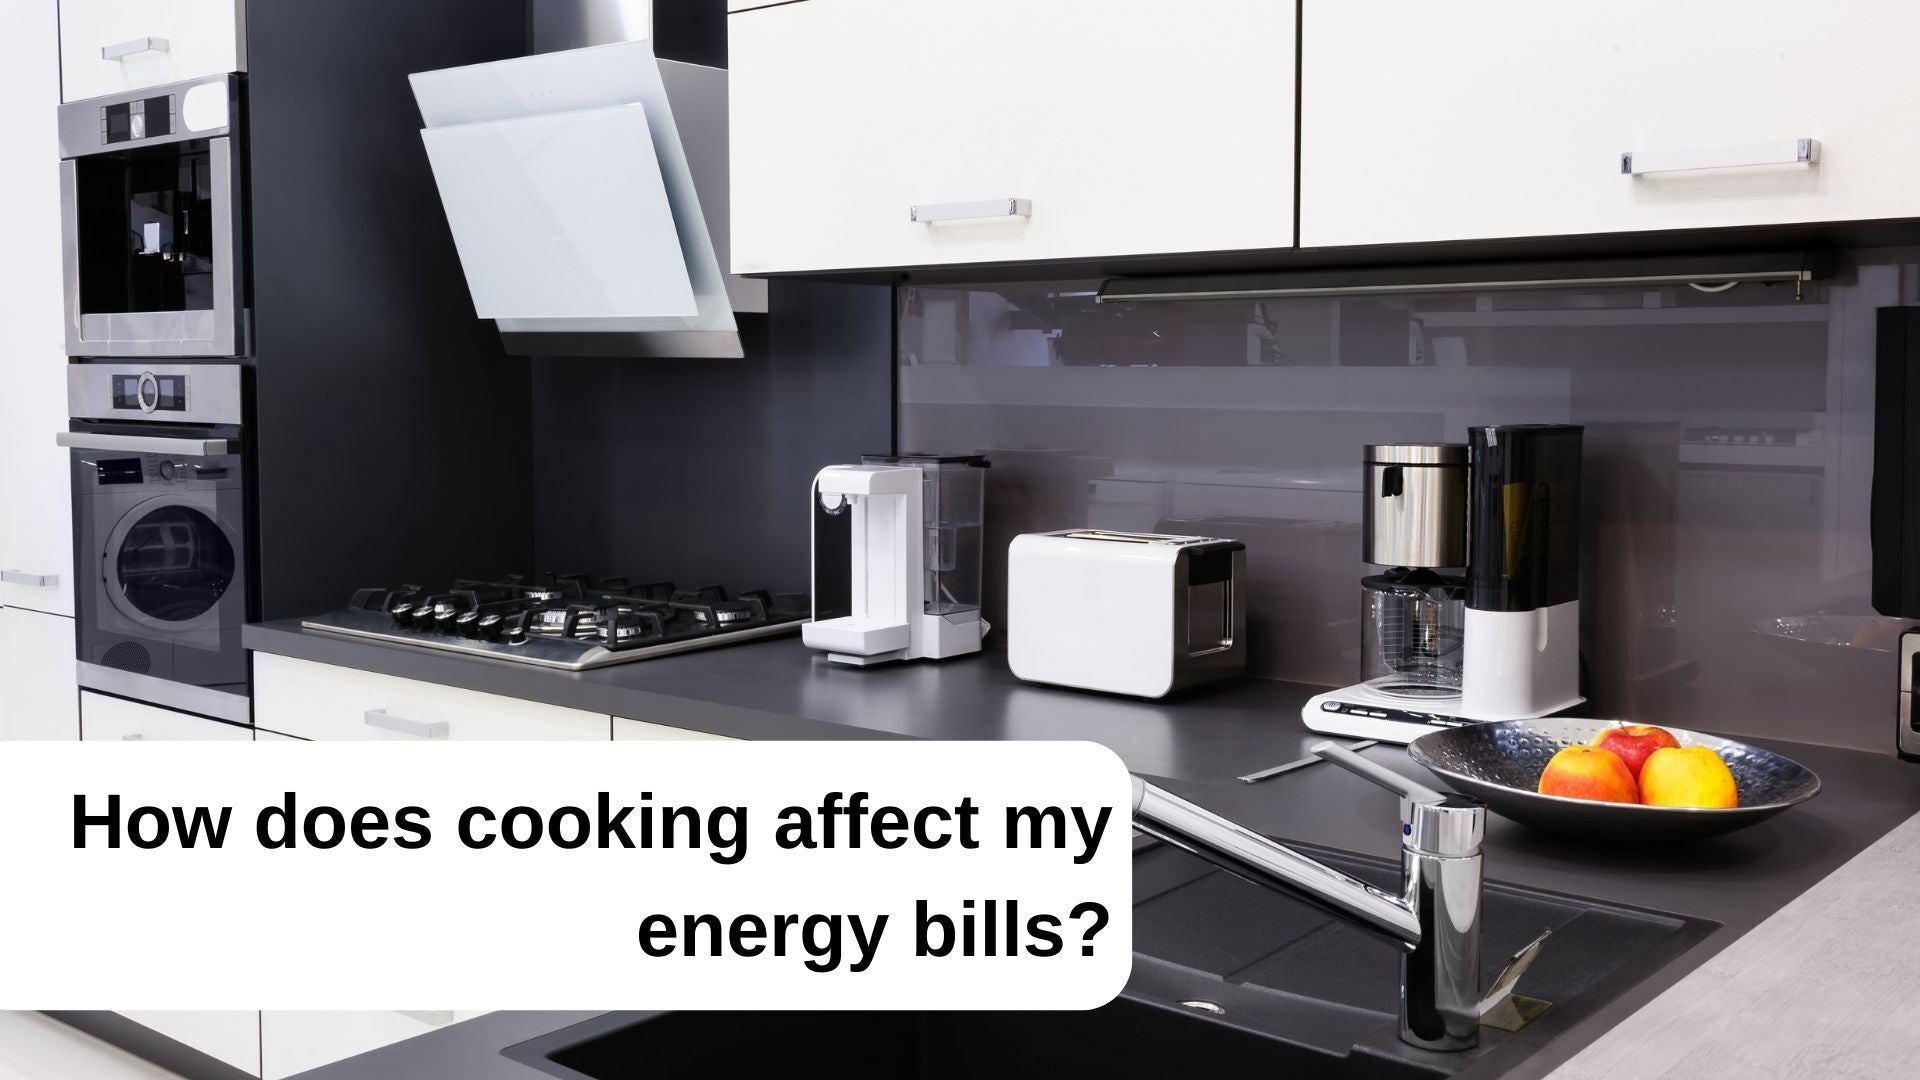 https://img.uswitch.com/n36b8lzdmgnp/1VwllAMJBcKdQa033JyiMB/b27320d7d05e45daa704b6ad4ef3c01e/How_does_cooking_affect_my_energy_bills_.jpg?